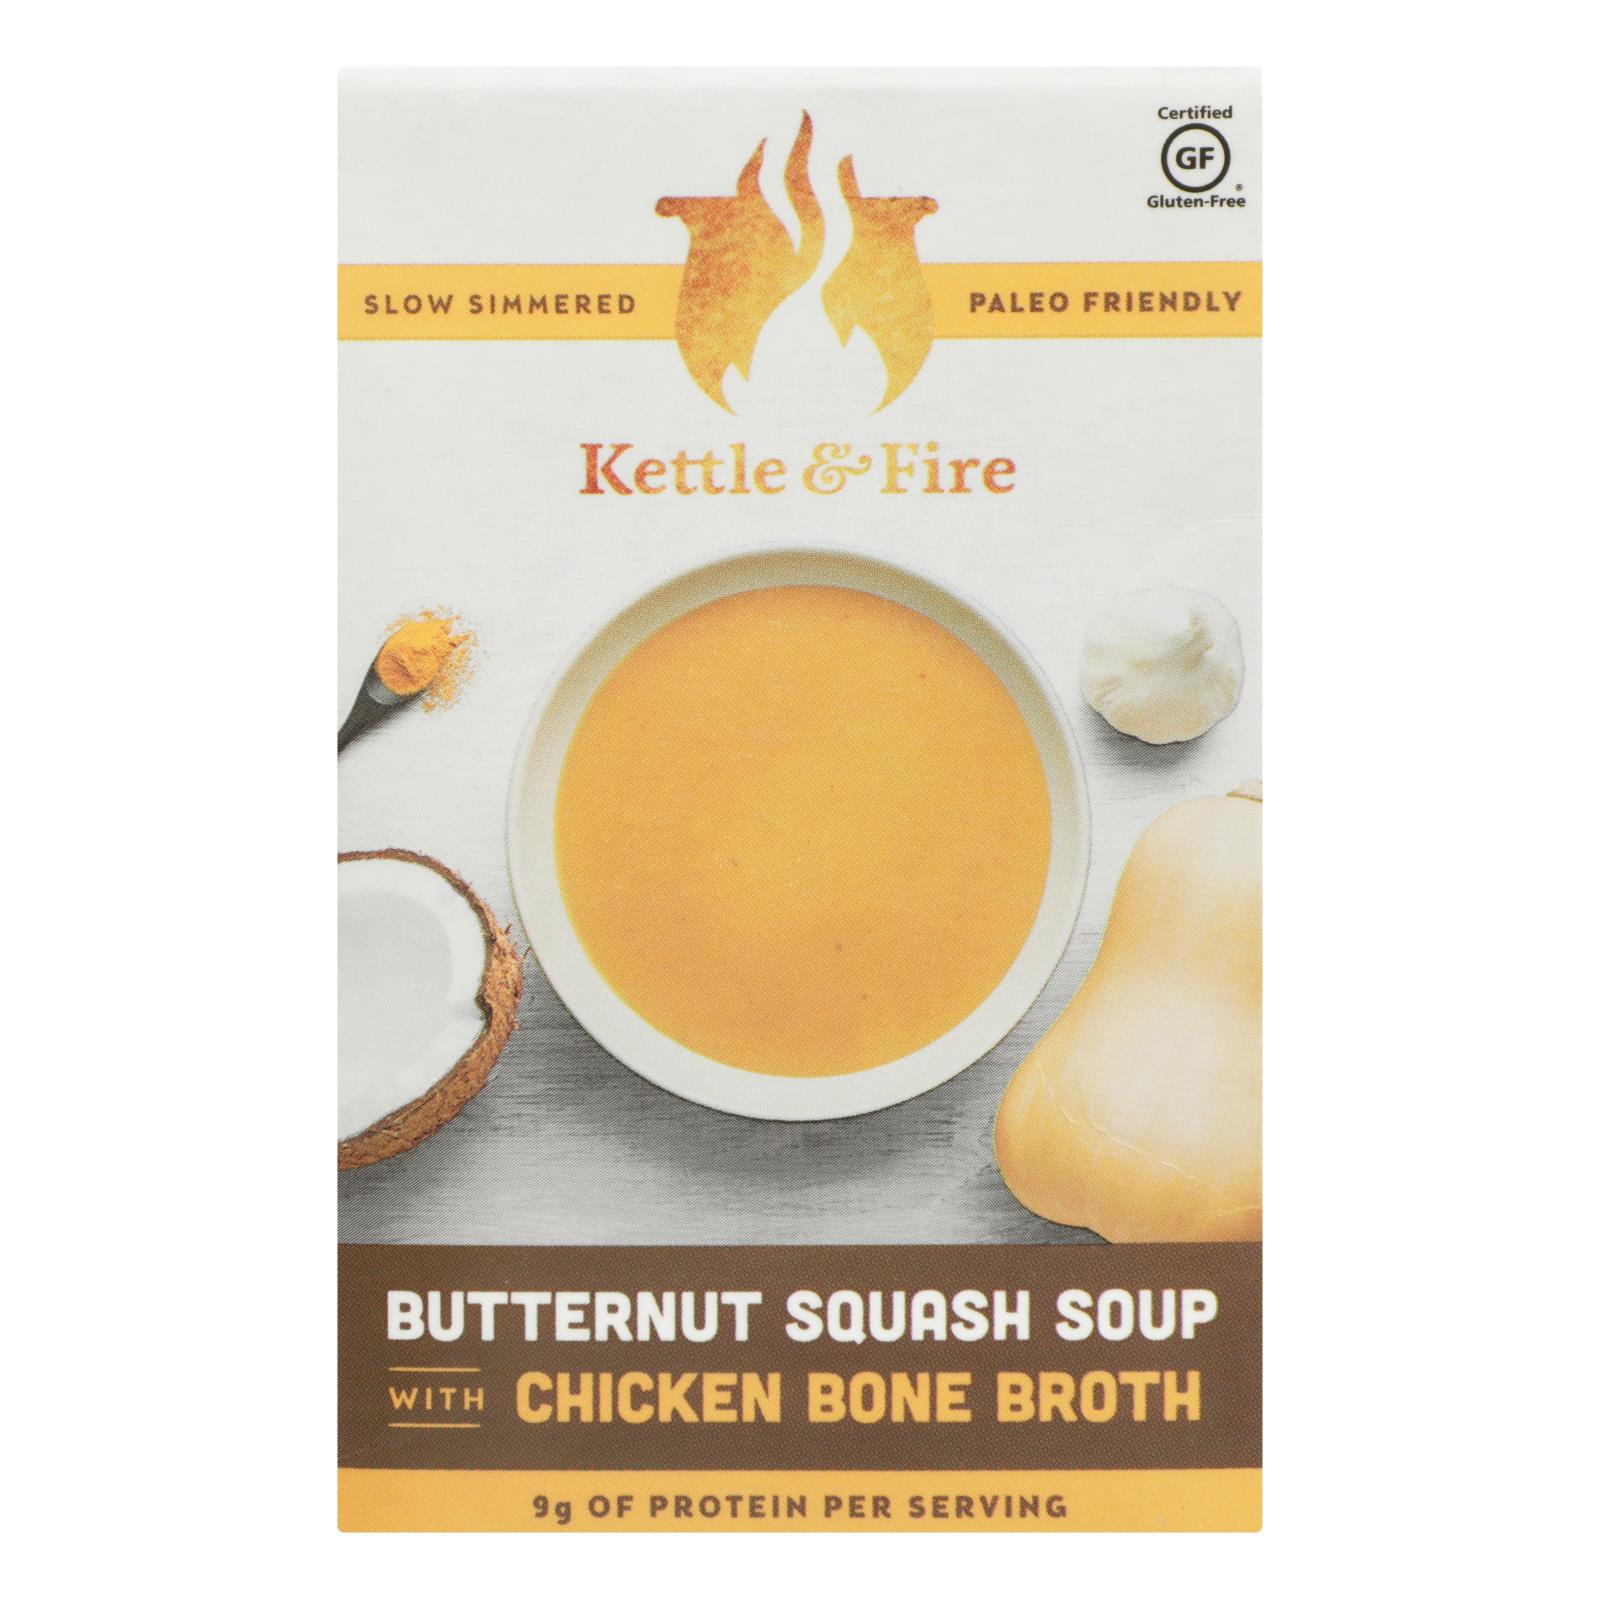 Kettle and Fire Soup - Butternut Squash Soup - 6개 묶음상품 - 16.9 oz.